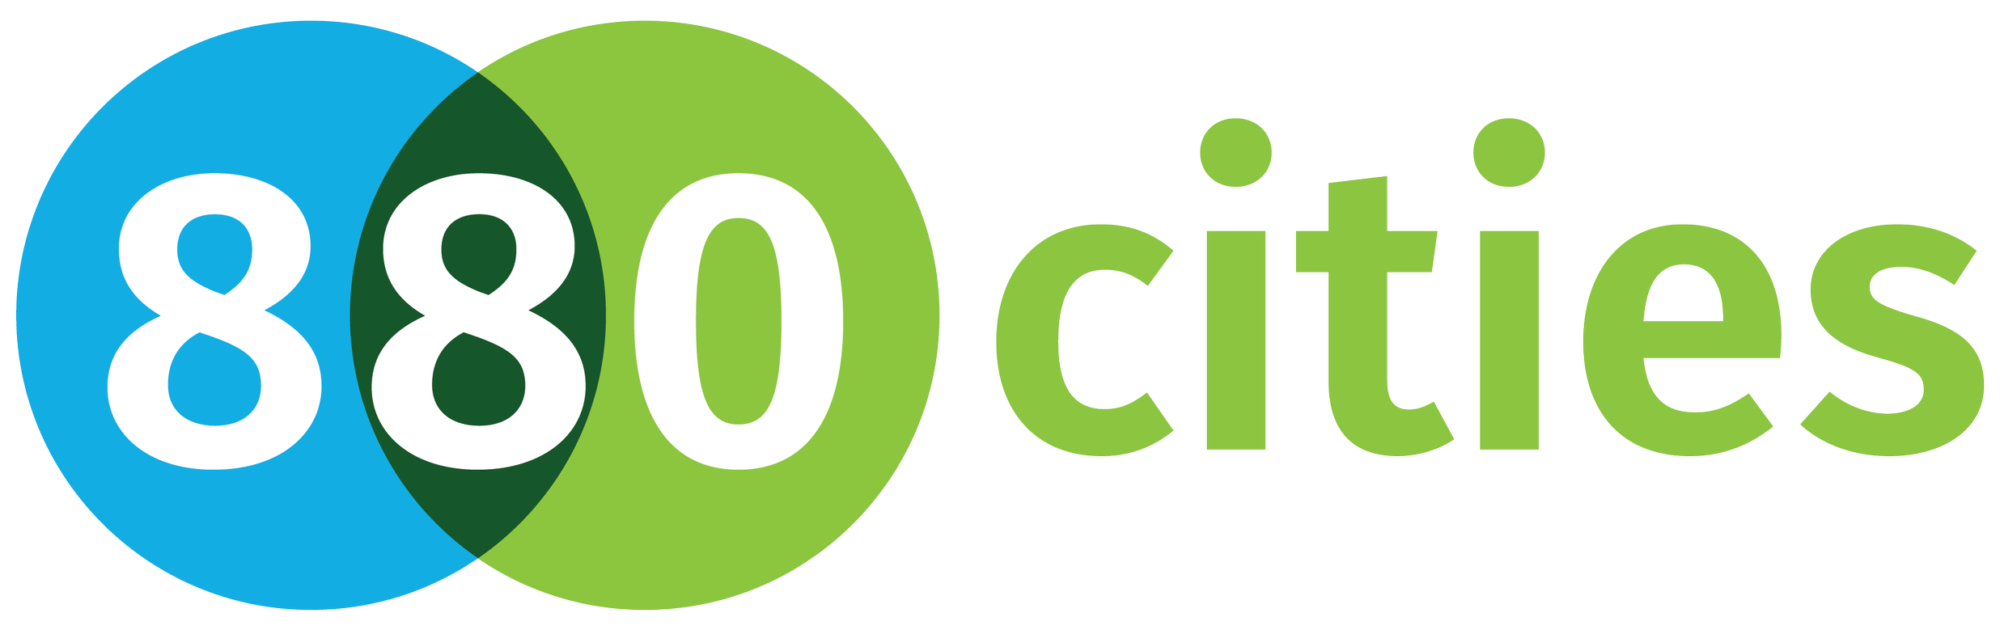 8 80 Cities Logo